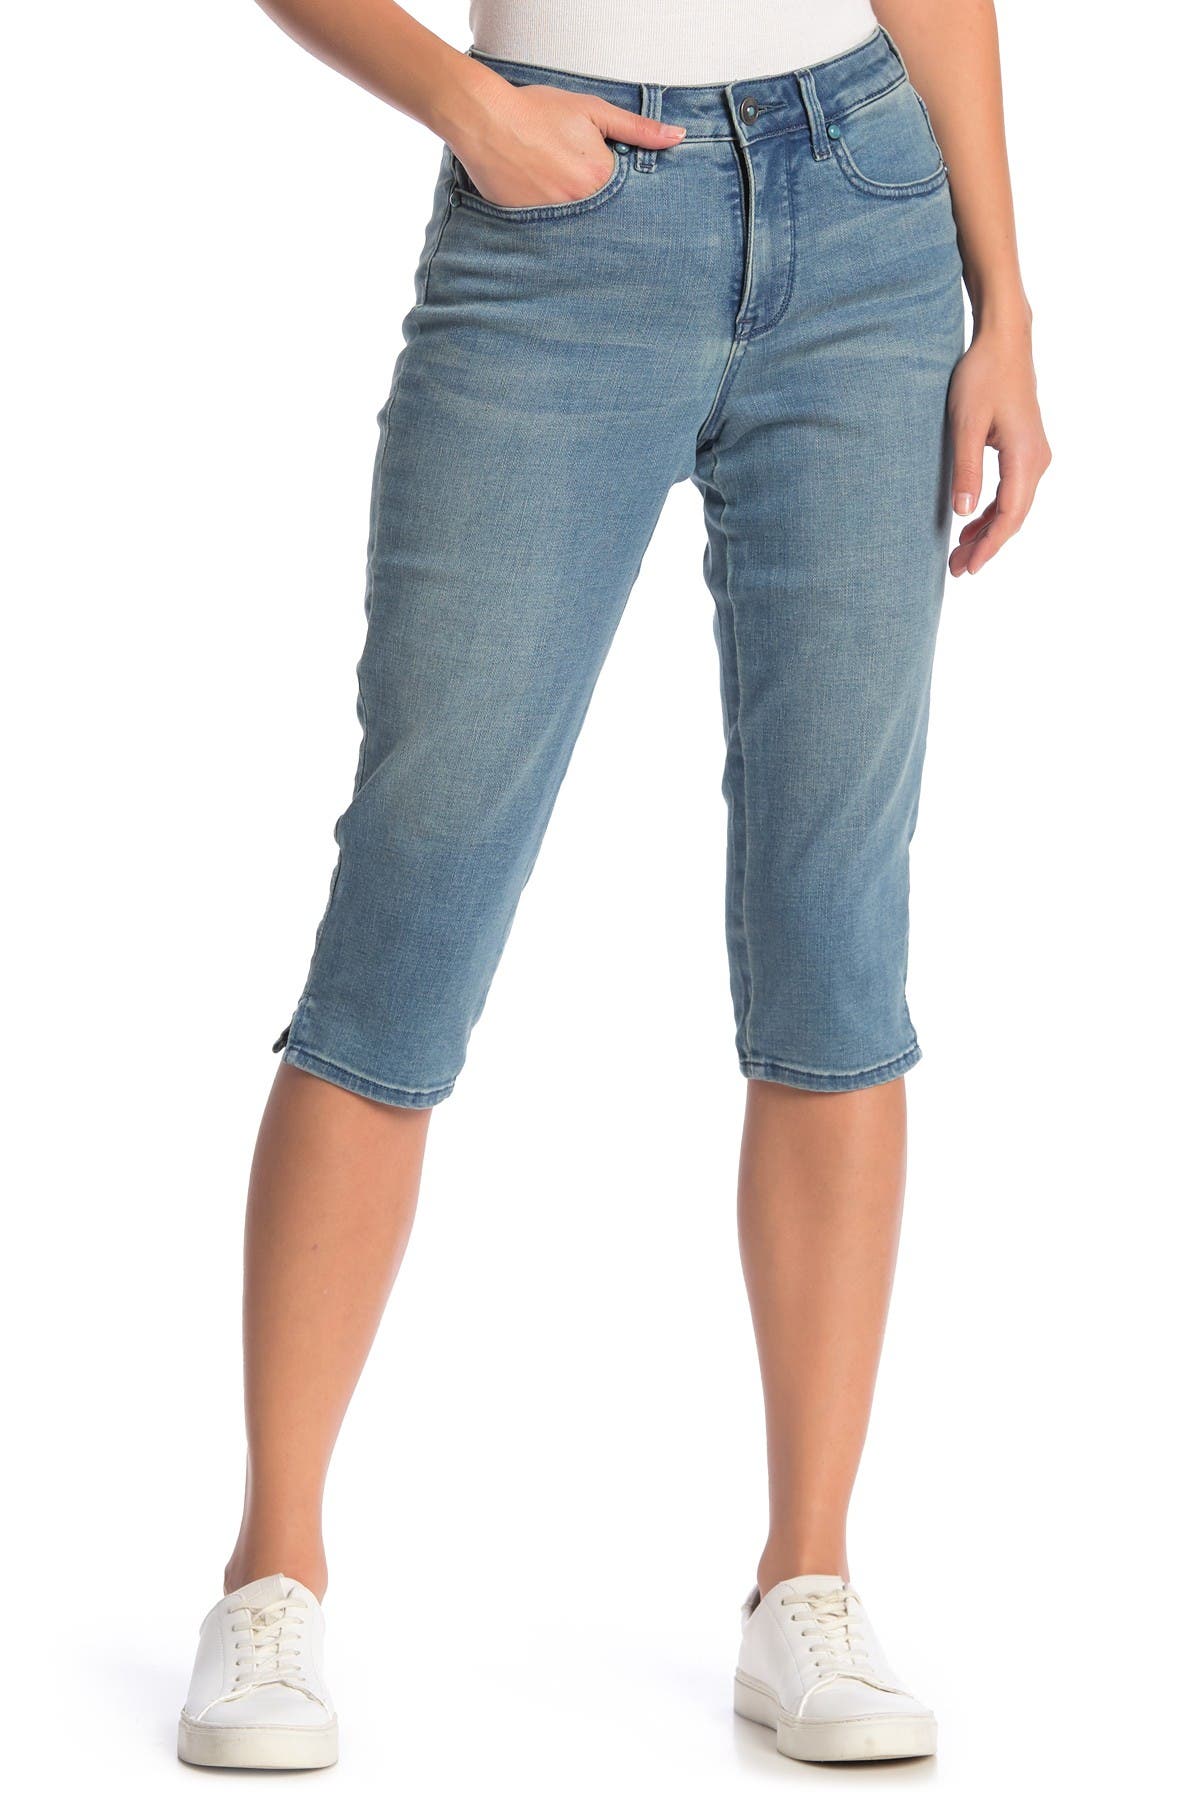 petite skinny capri jeans